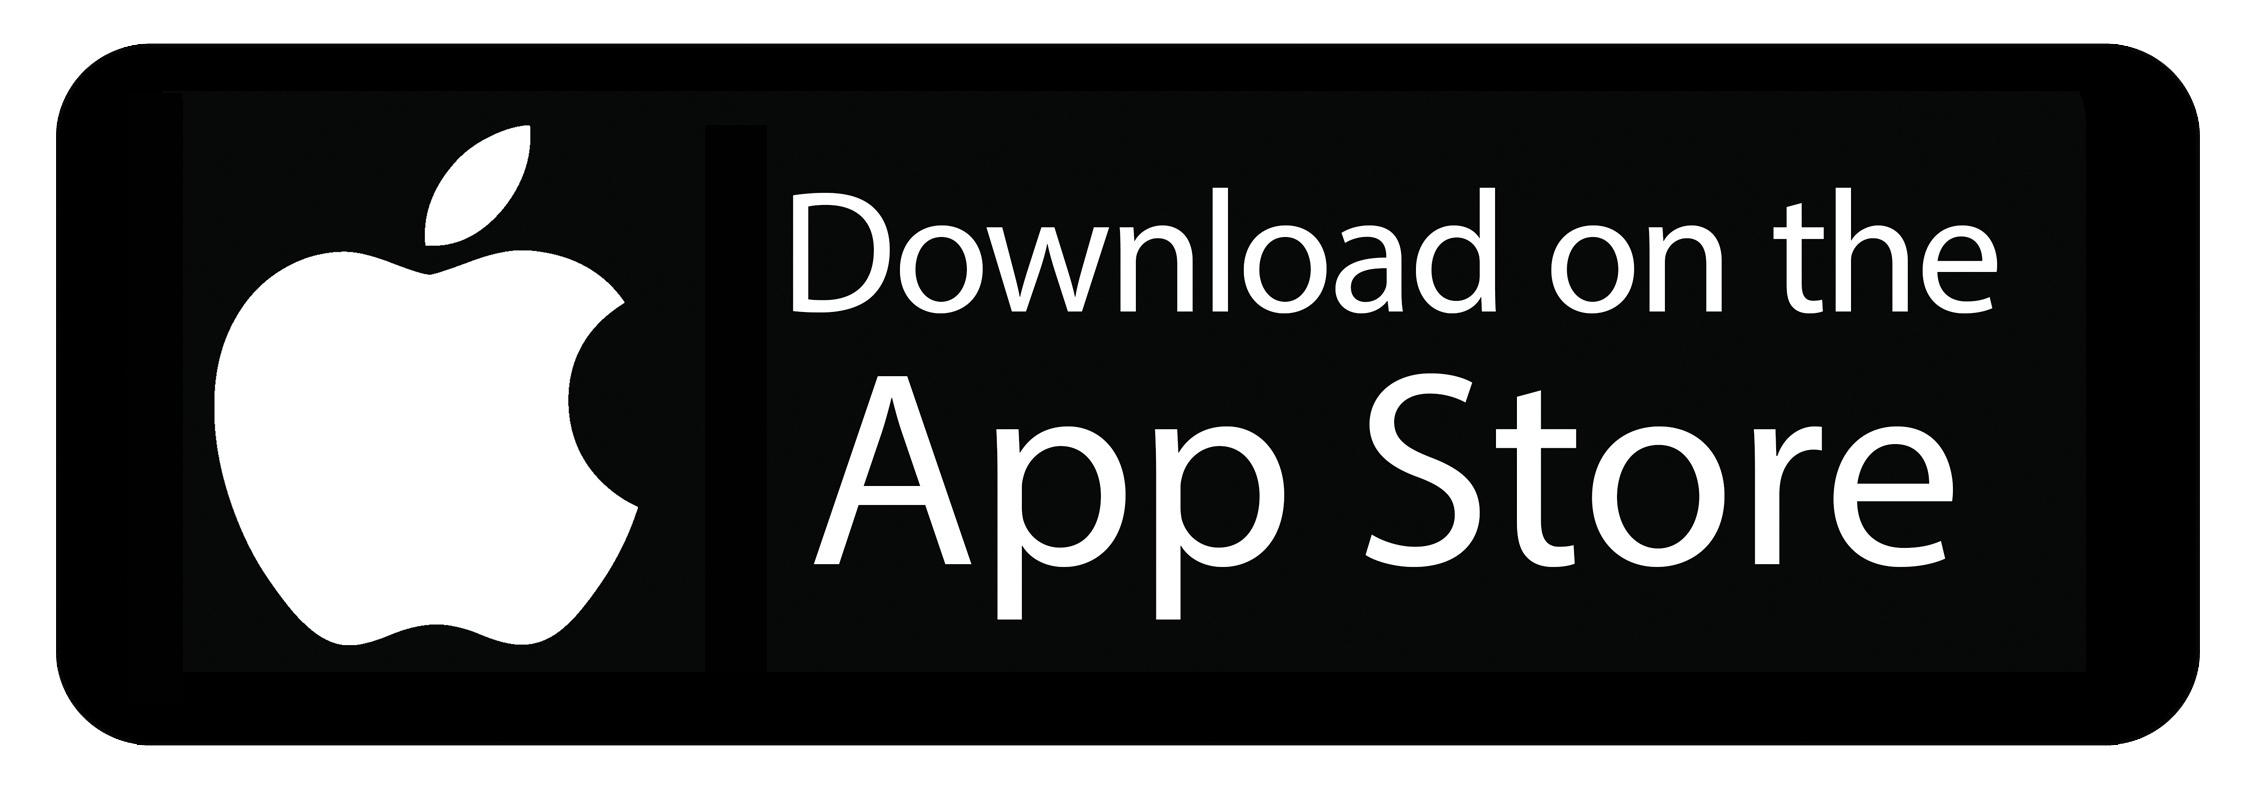 FPS.io on the App Store